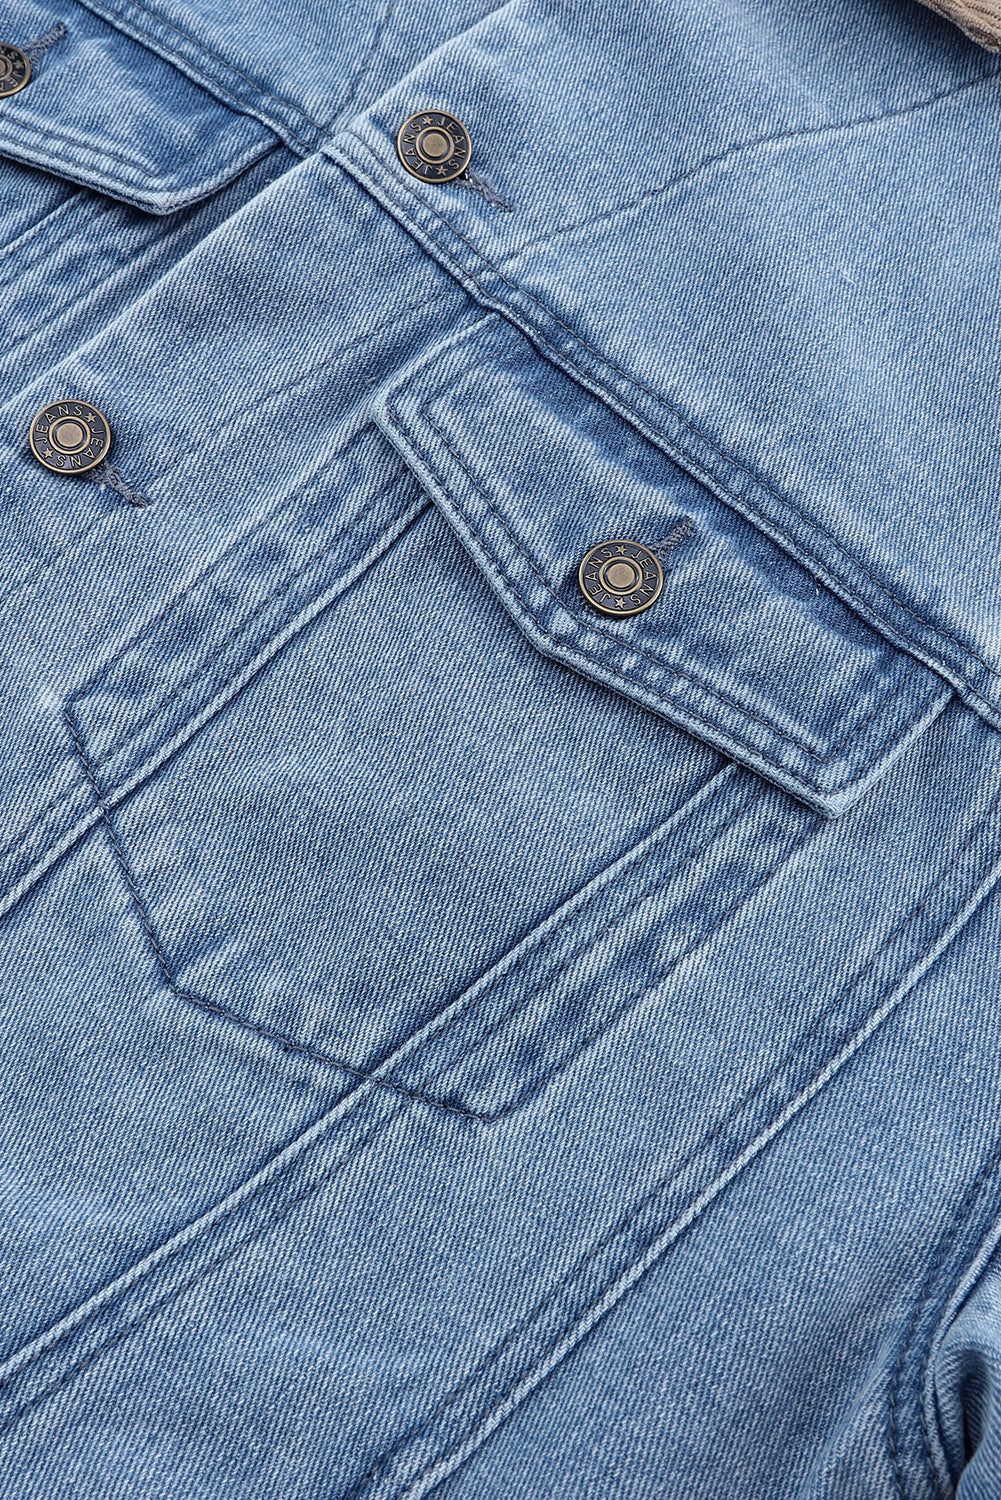 Himmelblaue Vintage-Jeansjacke mit Cordkragen